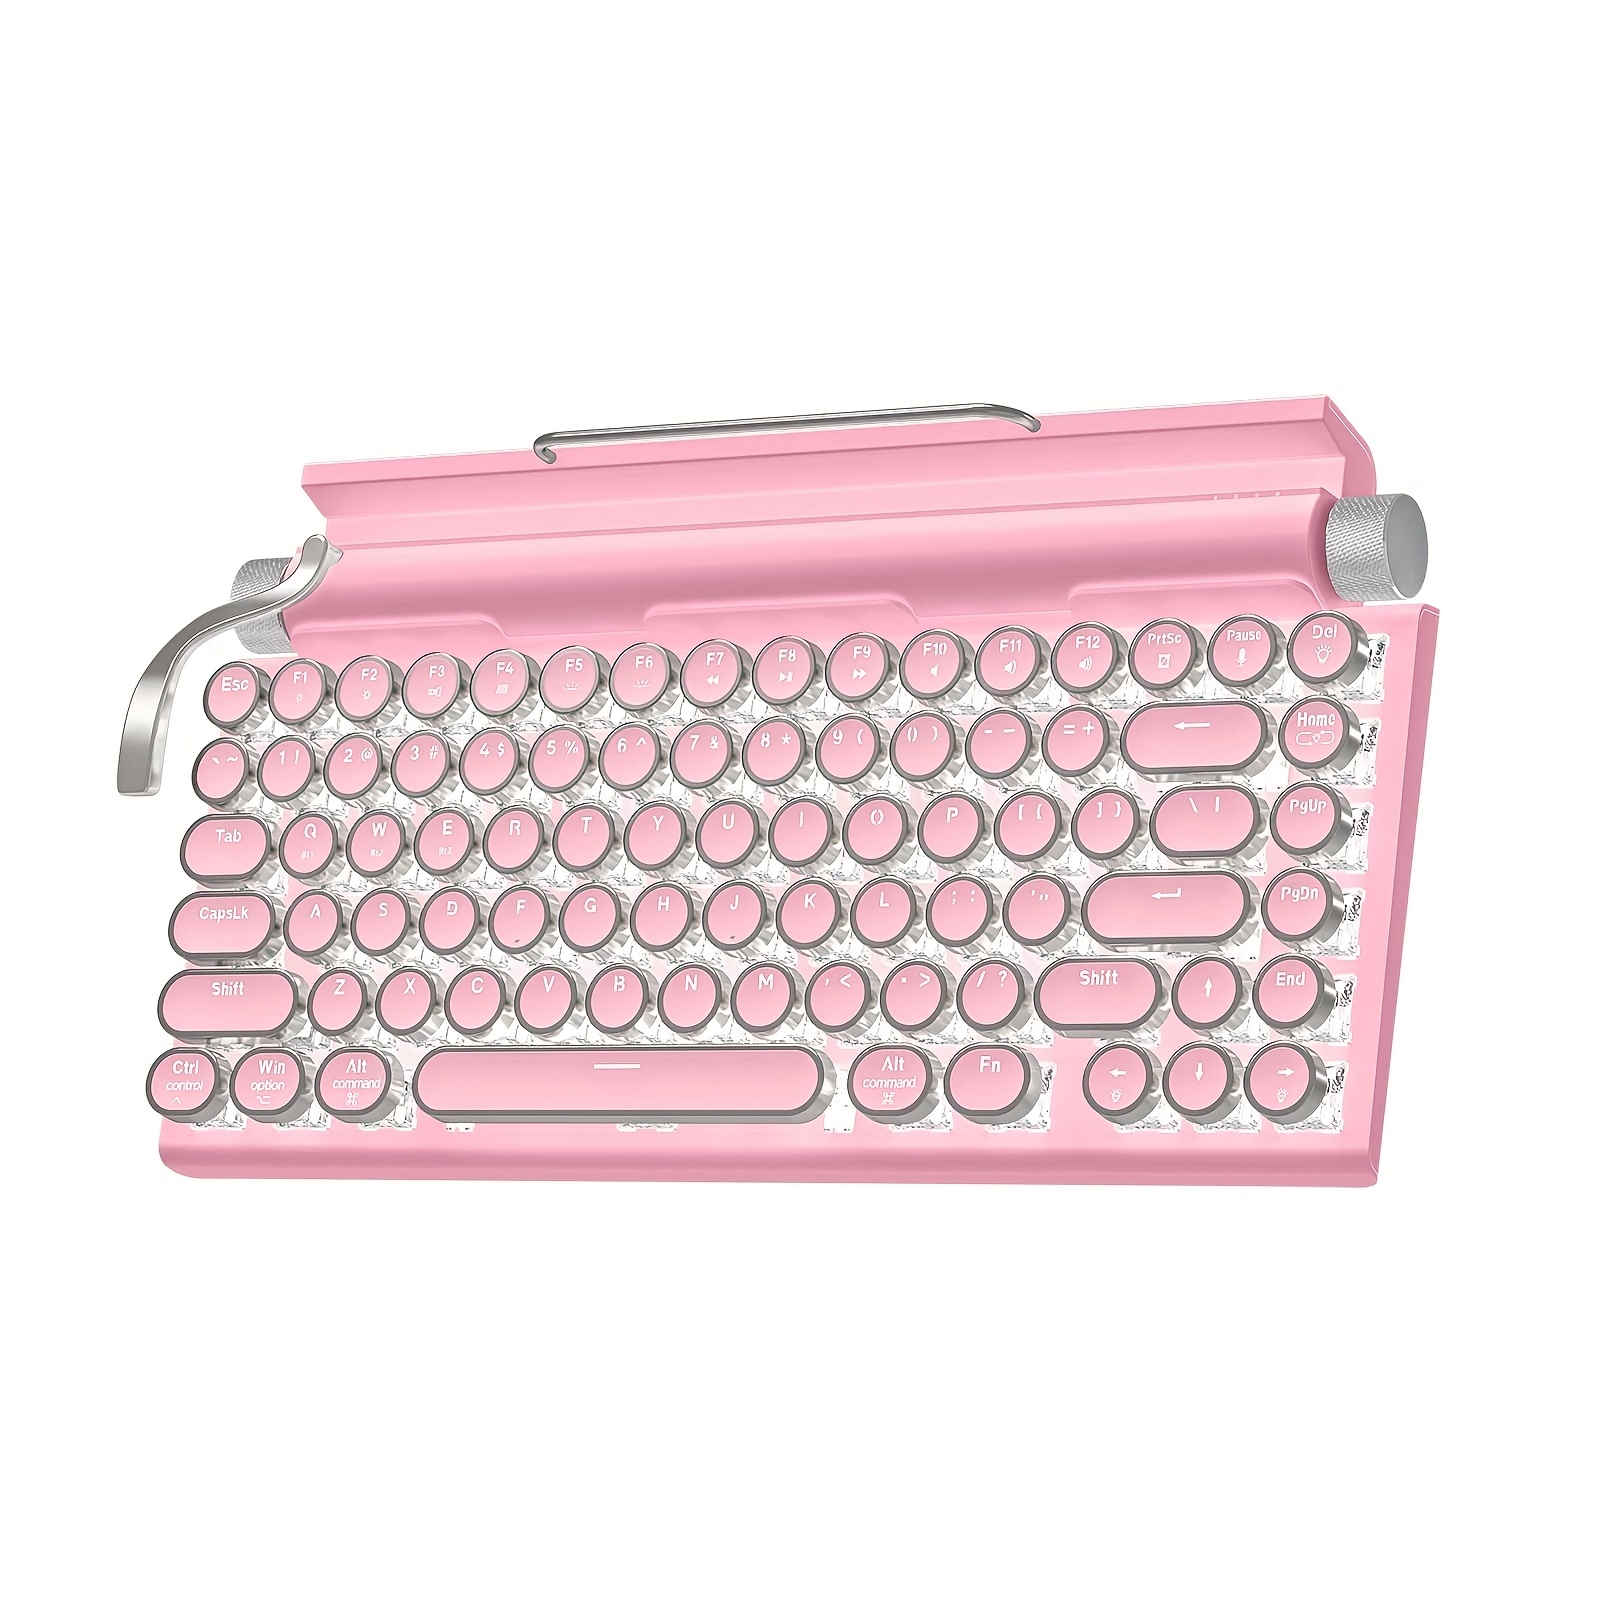 Máquina de escribir retro - pink / rosa